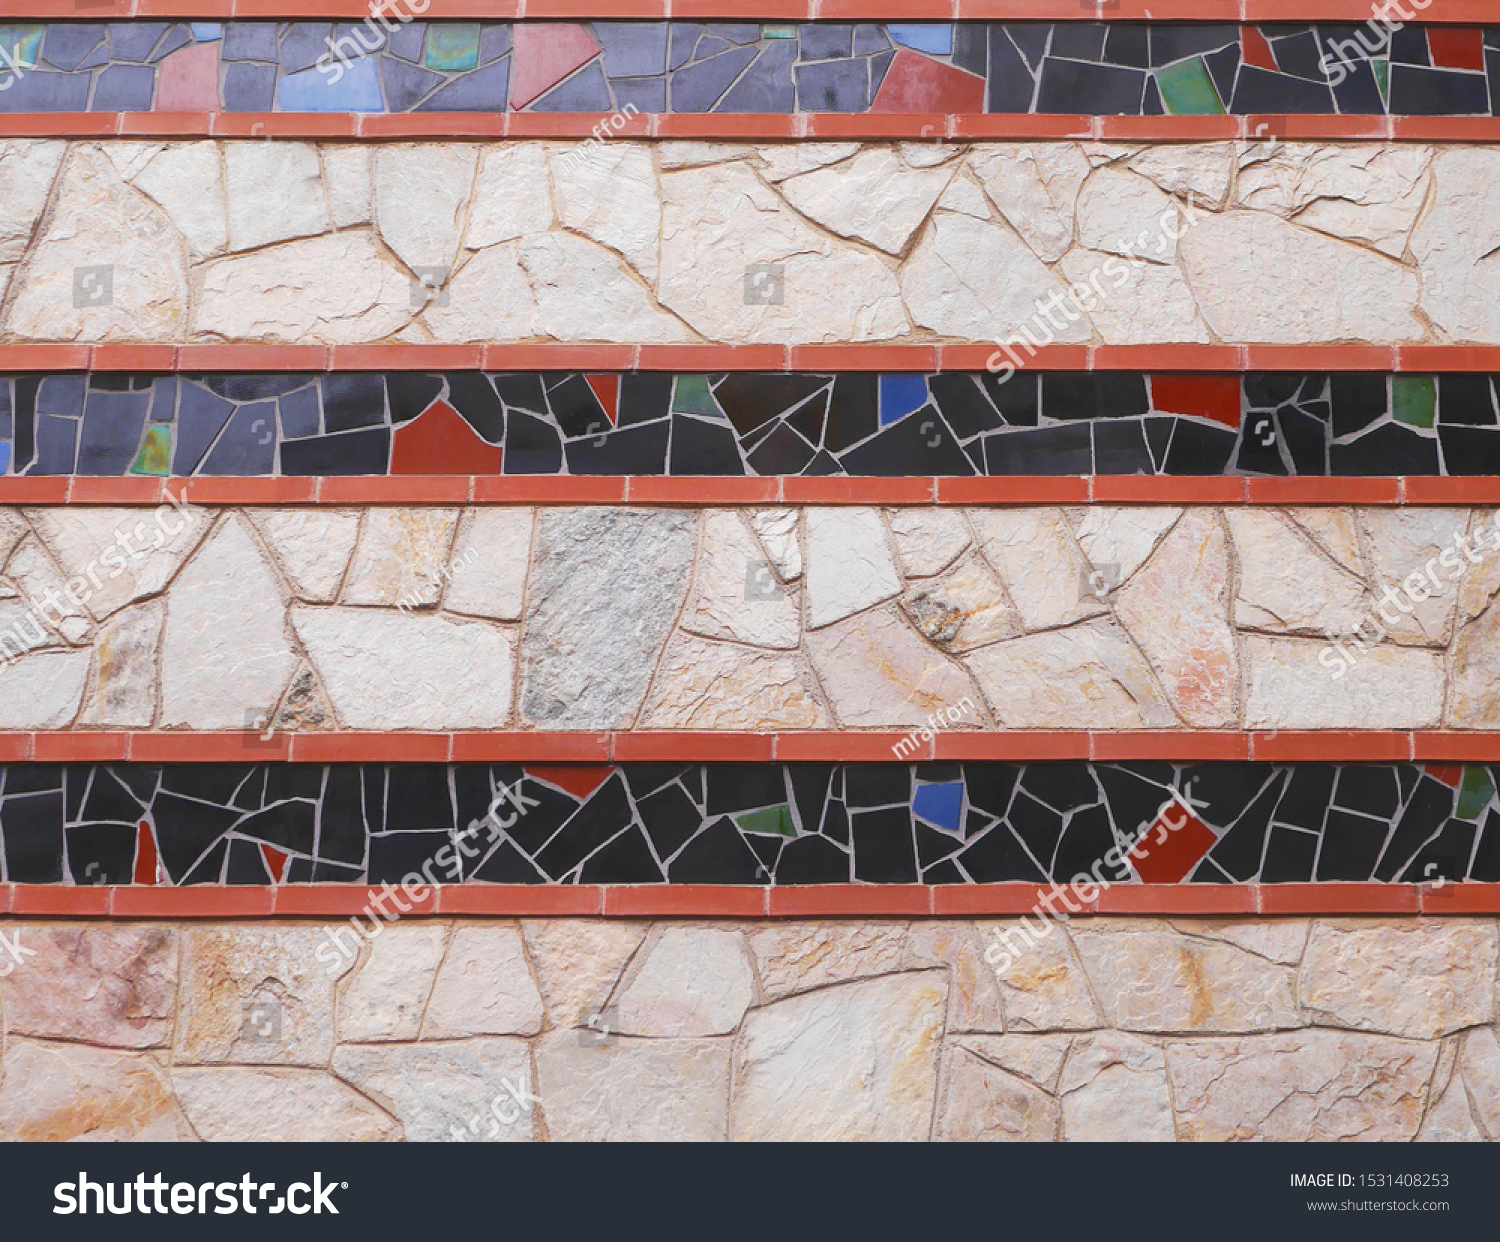 Mosaic border with 
stone masonry. Stone border with mosaic interspersed. #1531408253